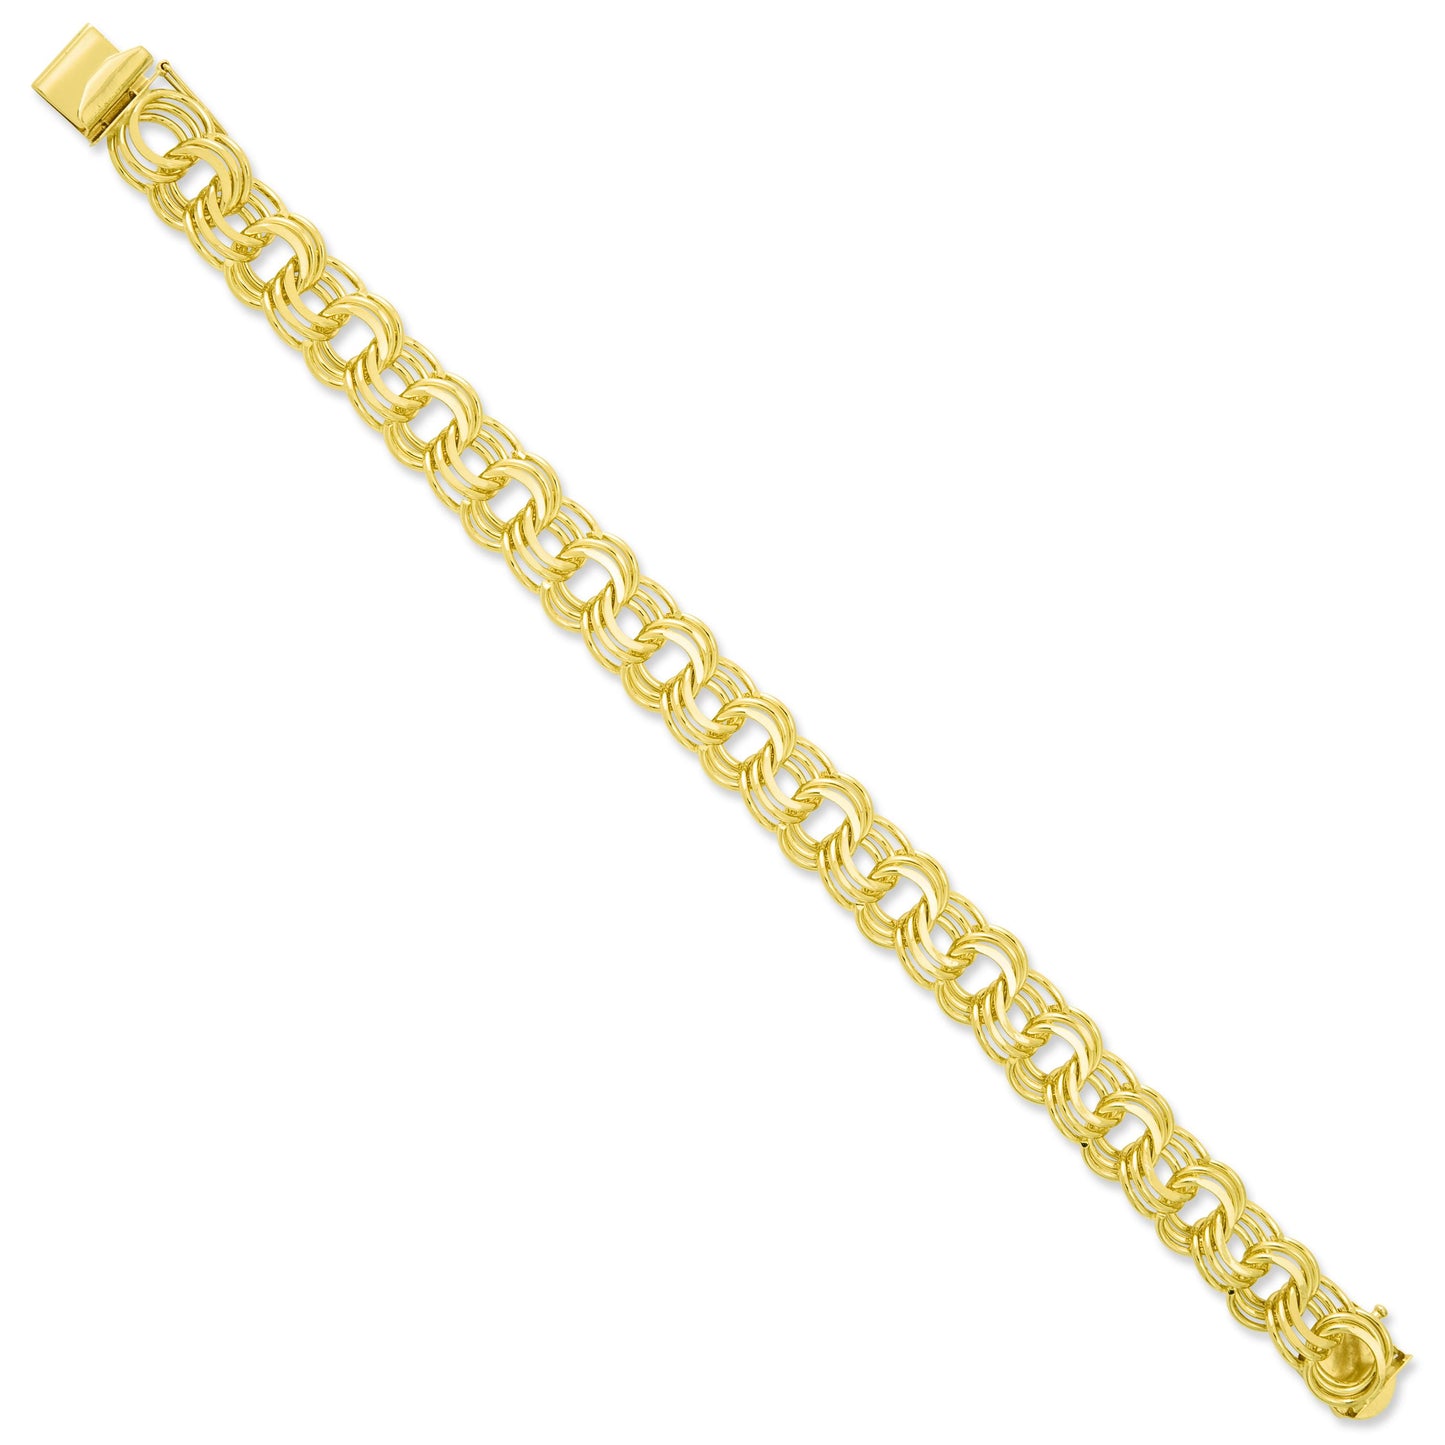 14K Gold Triple Link Charm Bracelet 7.5 Inches